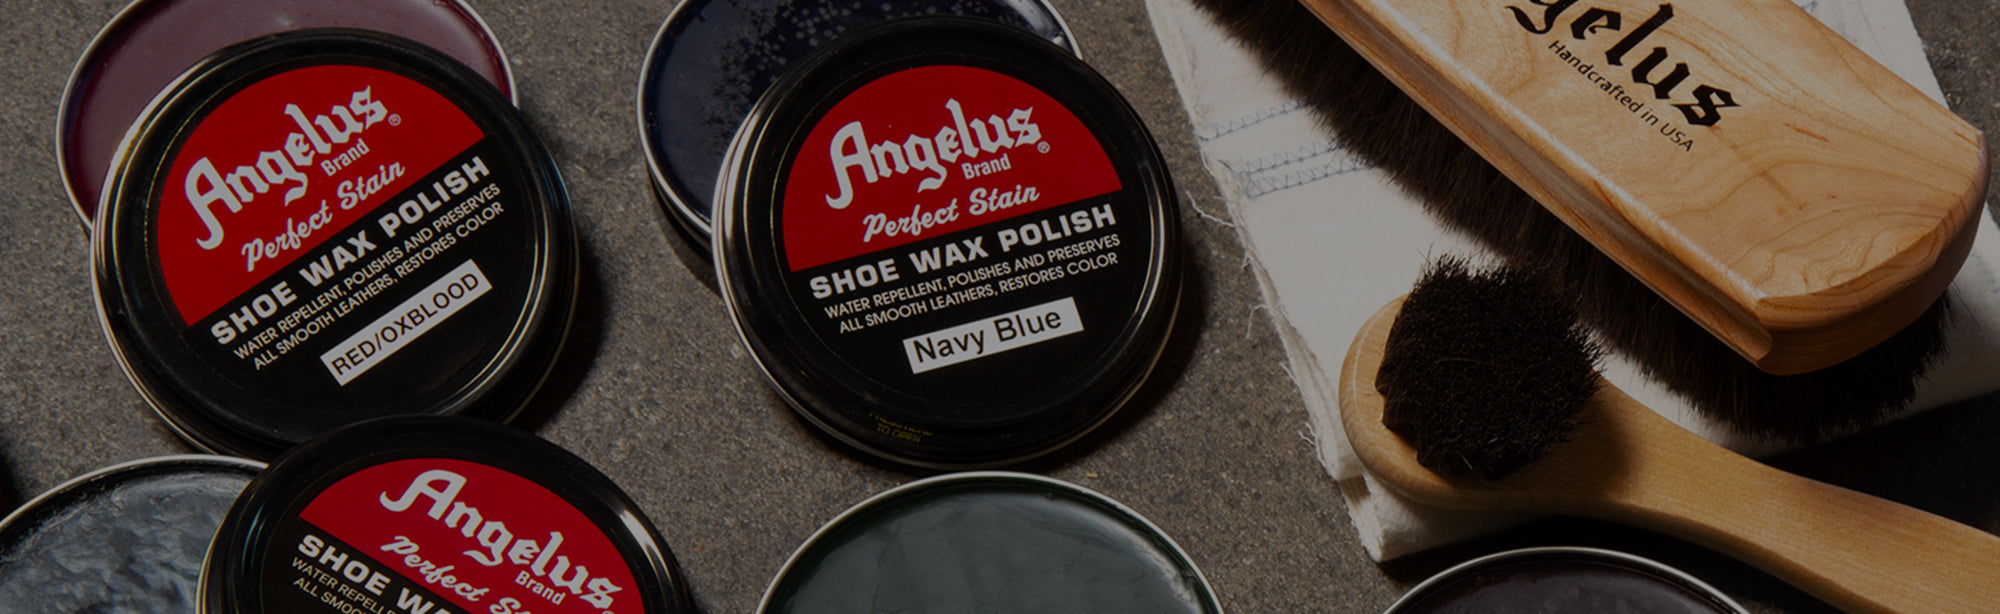 Angelus Shoe Polish - Loving these colors😍 📸 @markkosrock All of